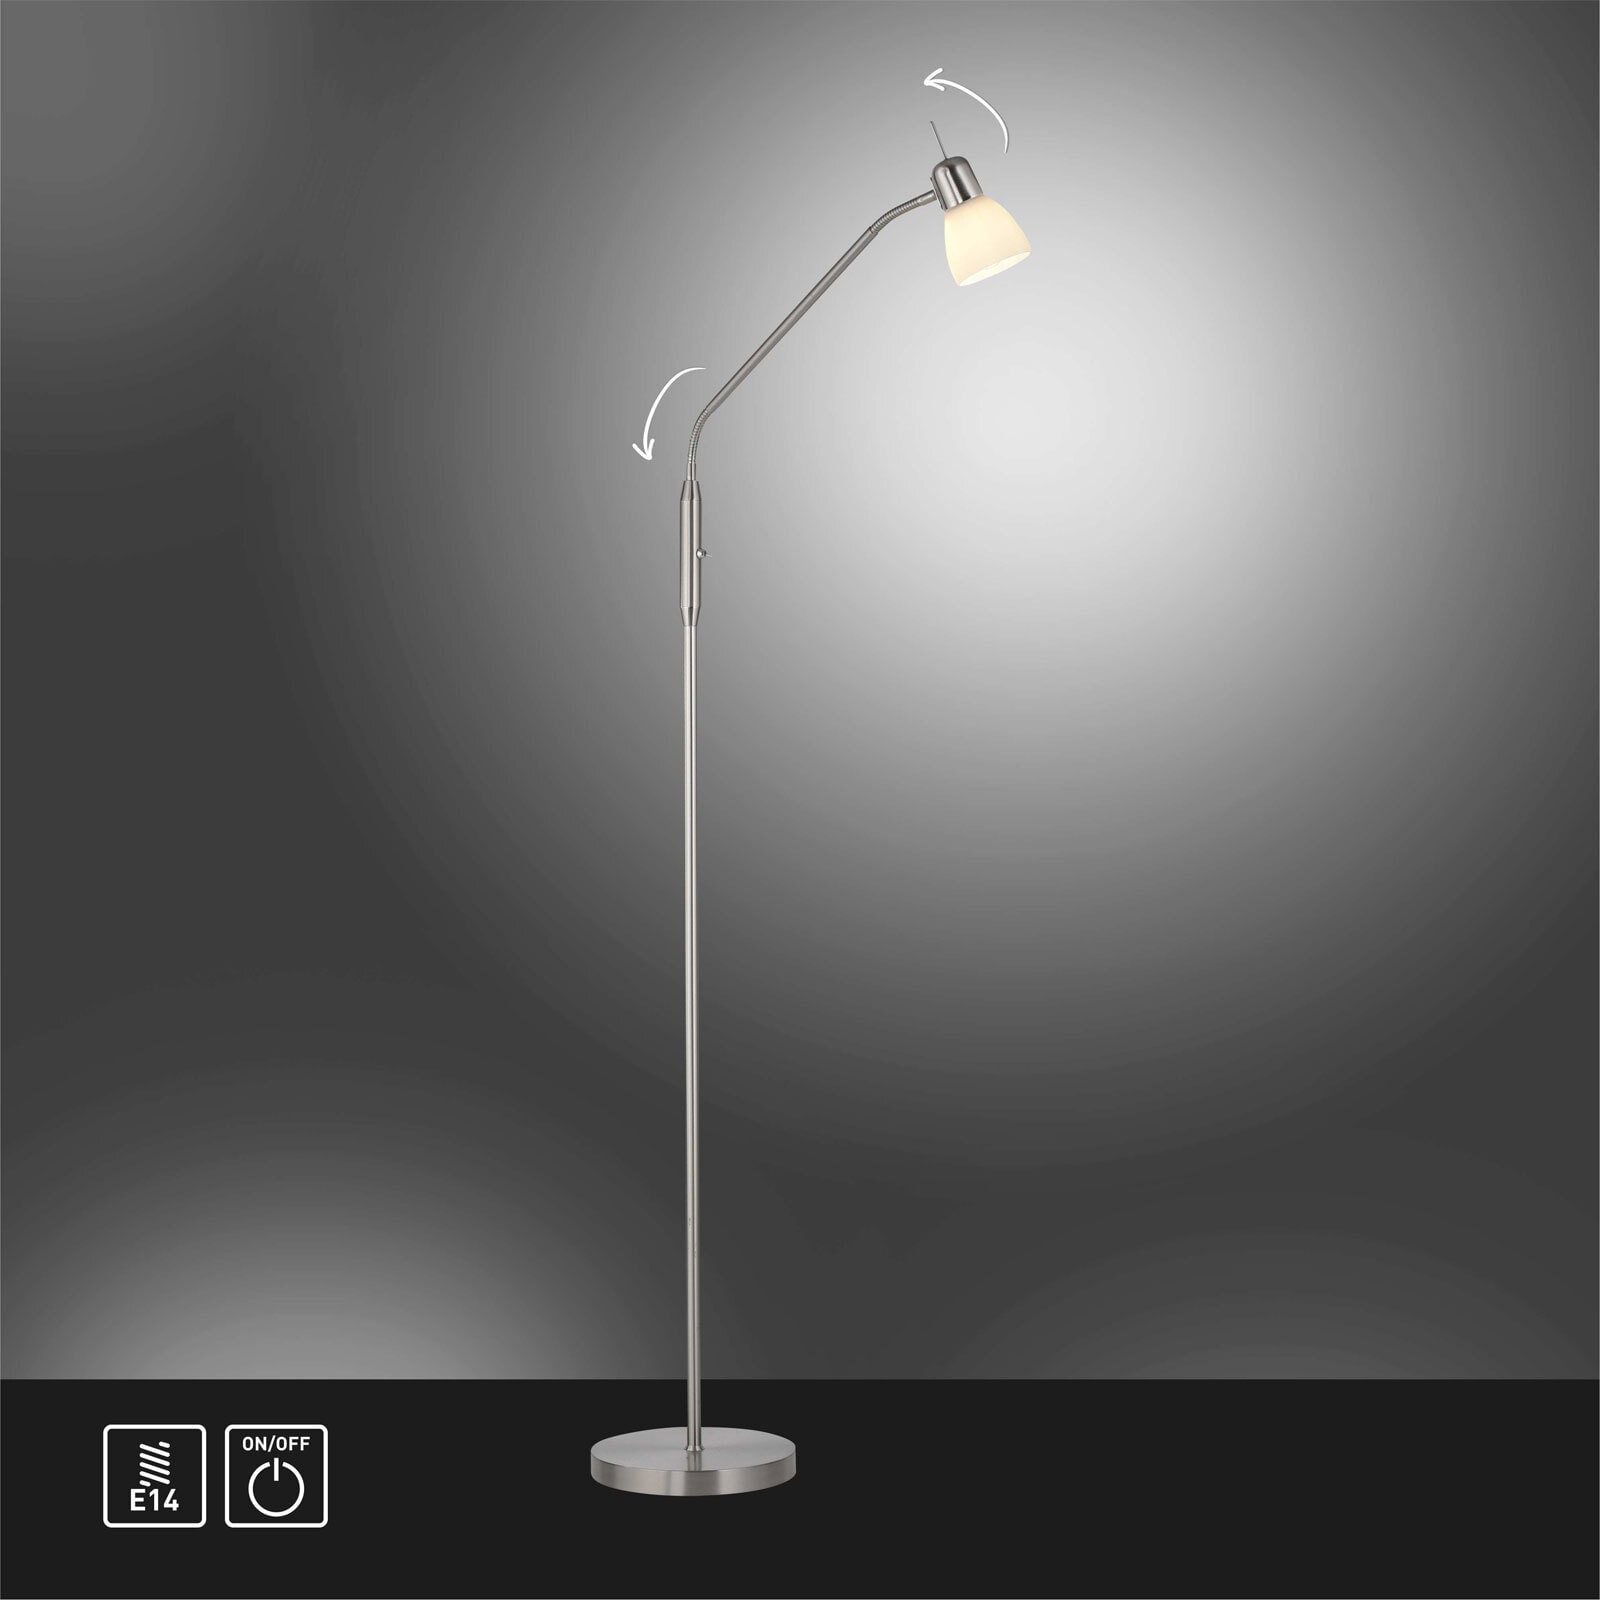 JUST LIGHT Retrofit Stehlampe KARO 159,5 cm stahlfarbig